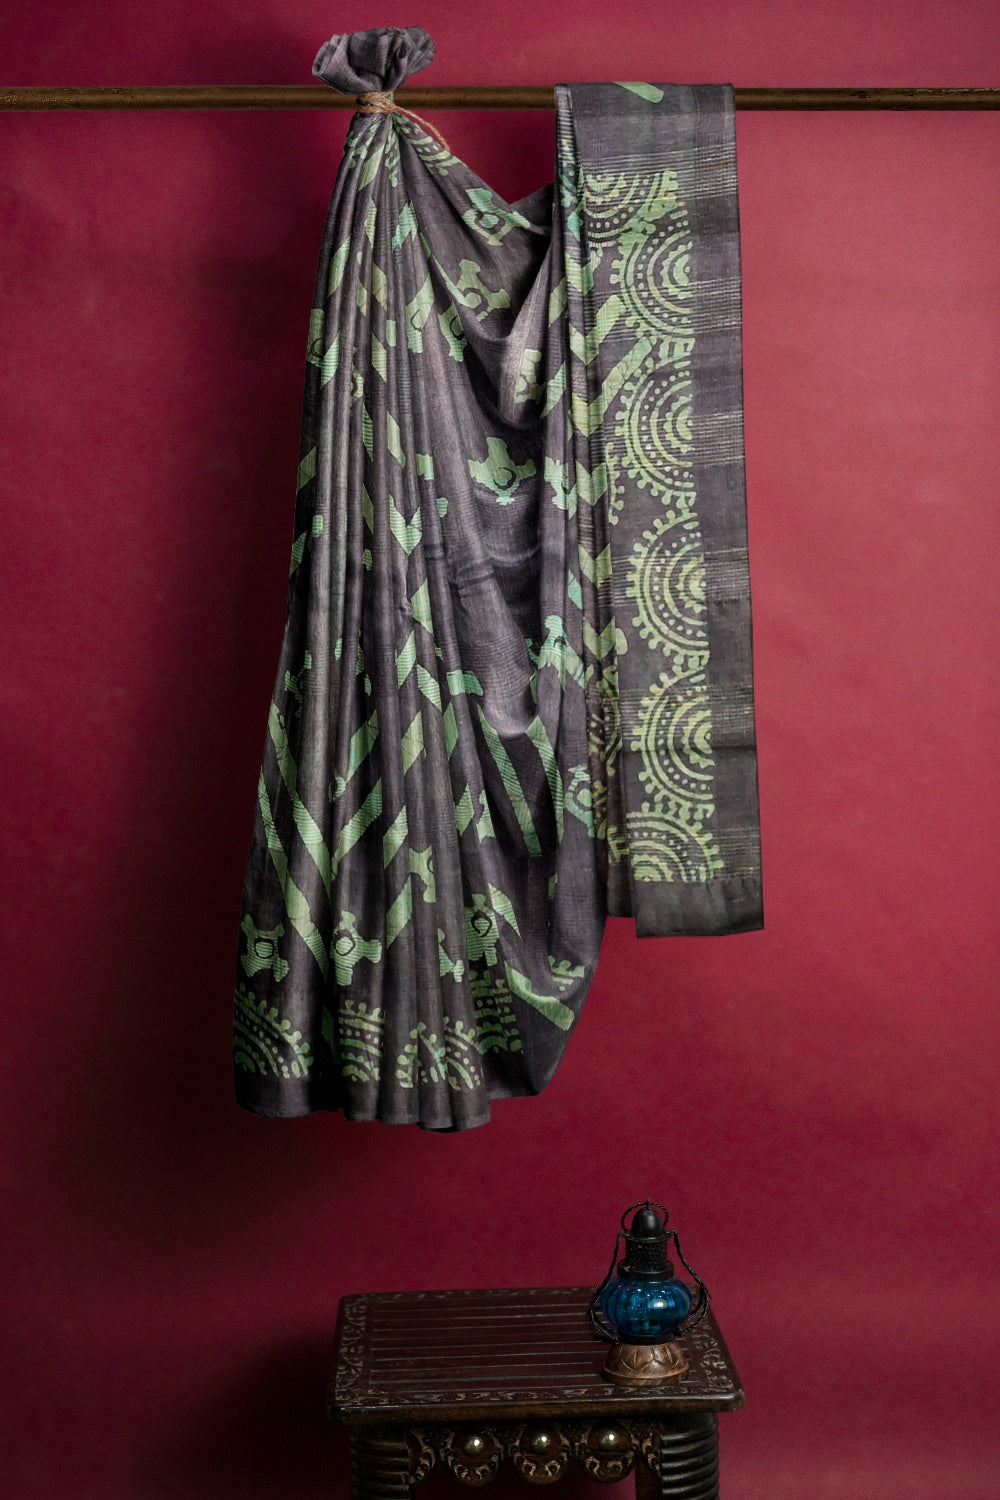 Southloom Cotton Designer Blue Saree with Baswara Print